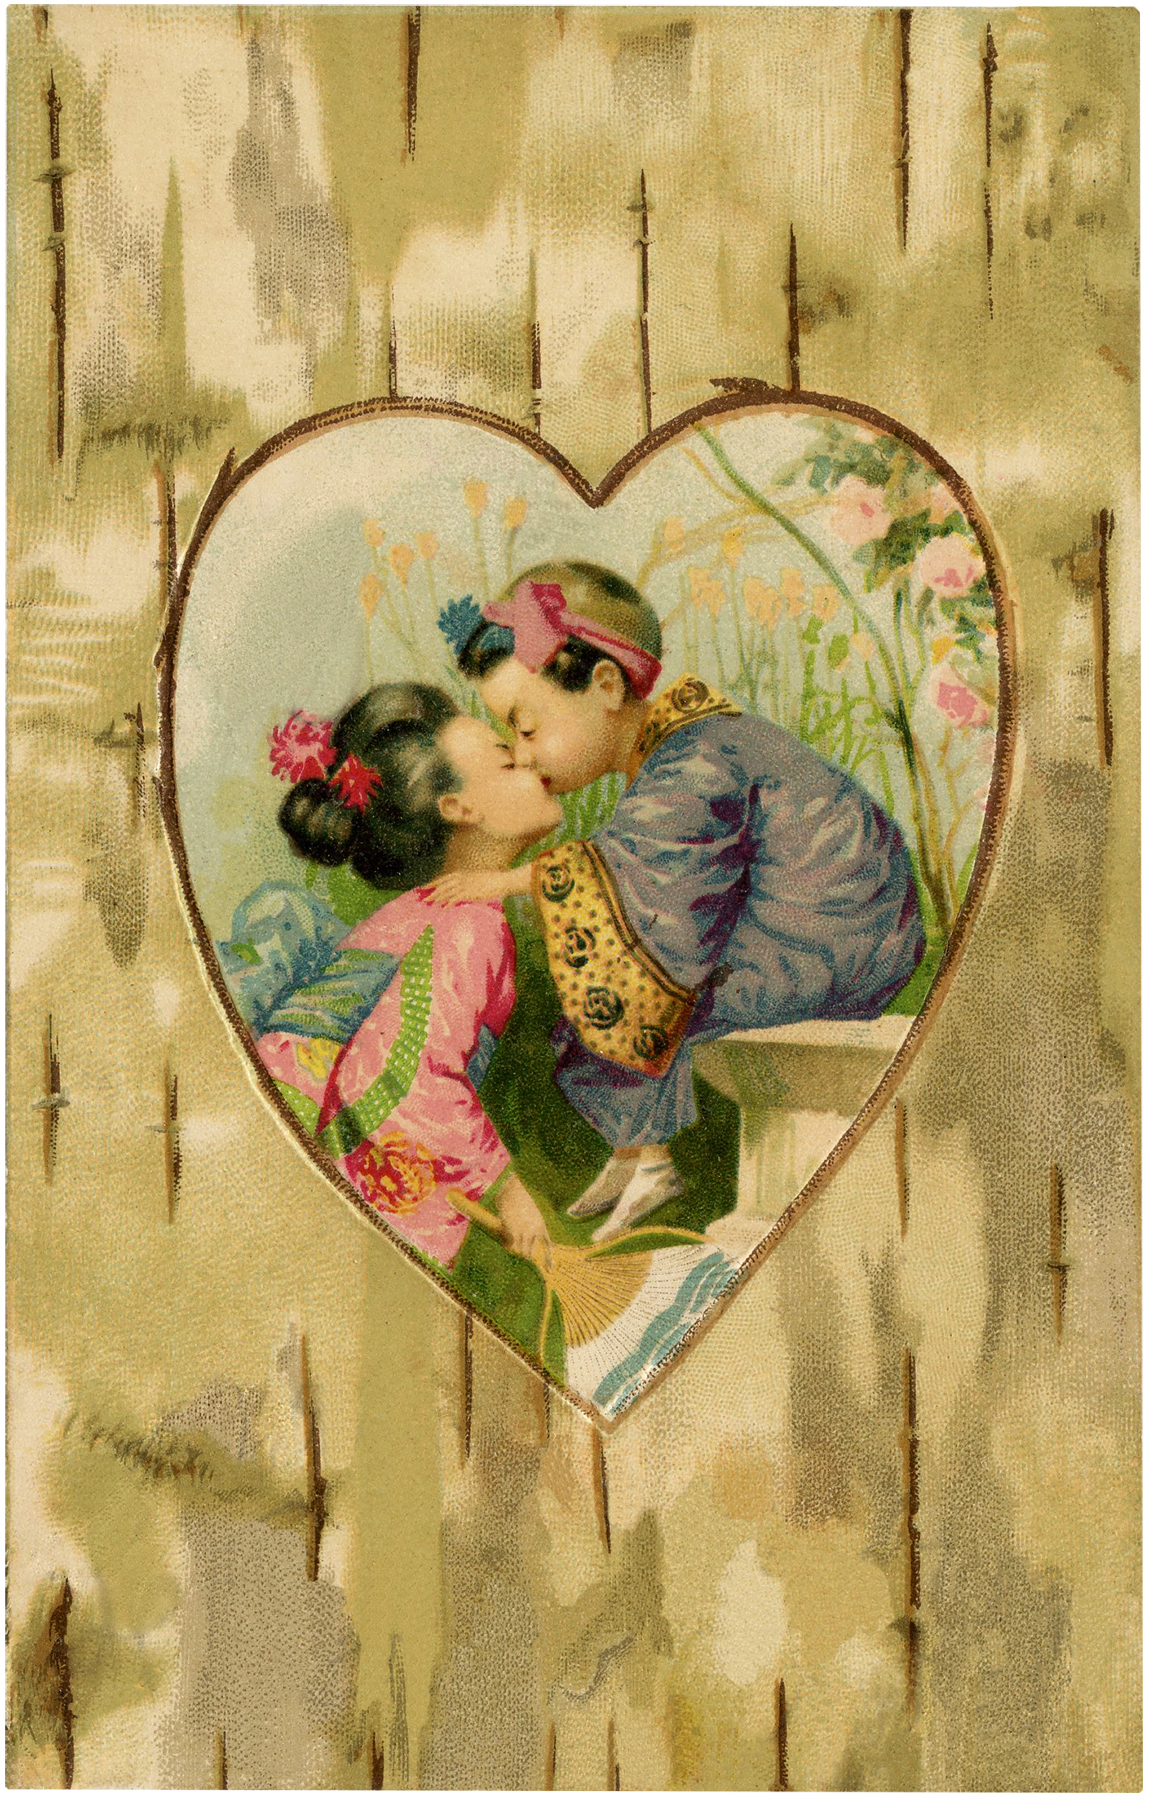 Vintage Children Kissing Image - Asian themed Art - The Graphics Fairy